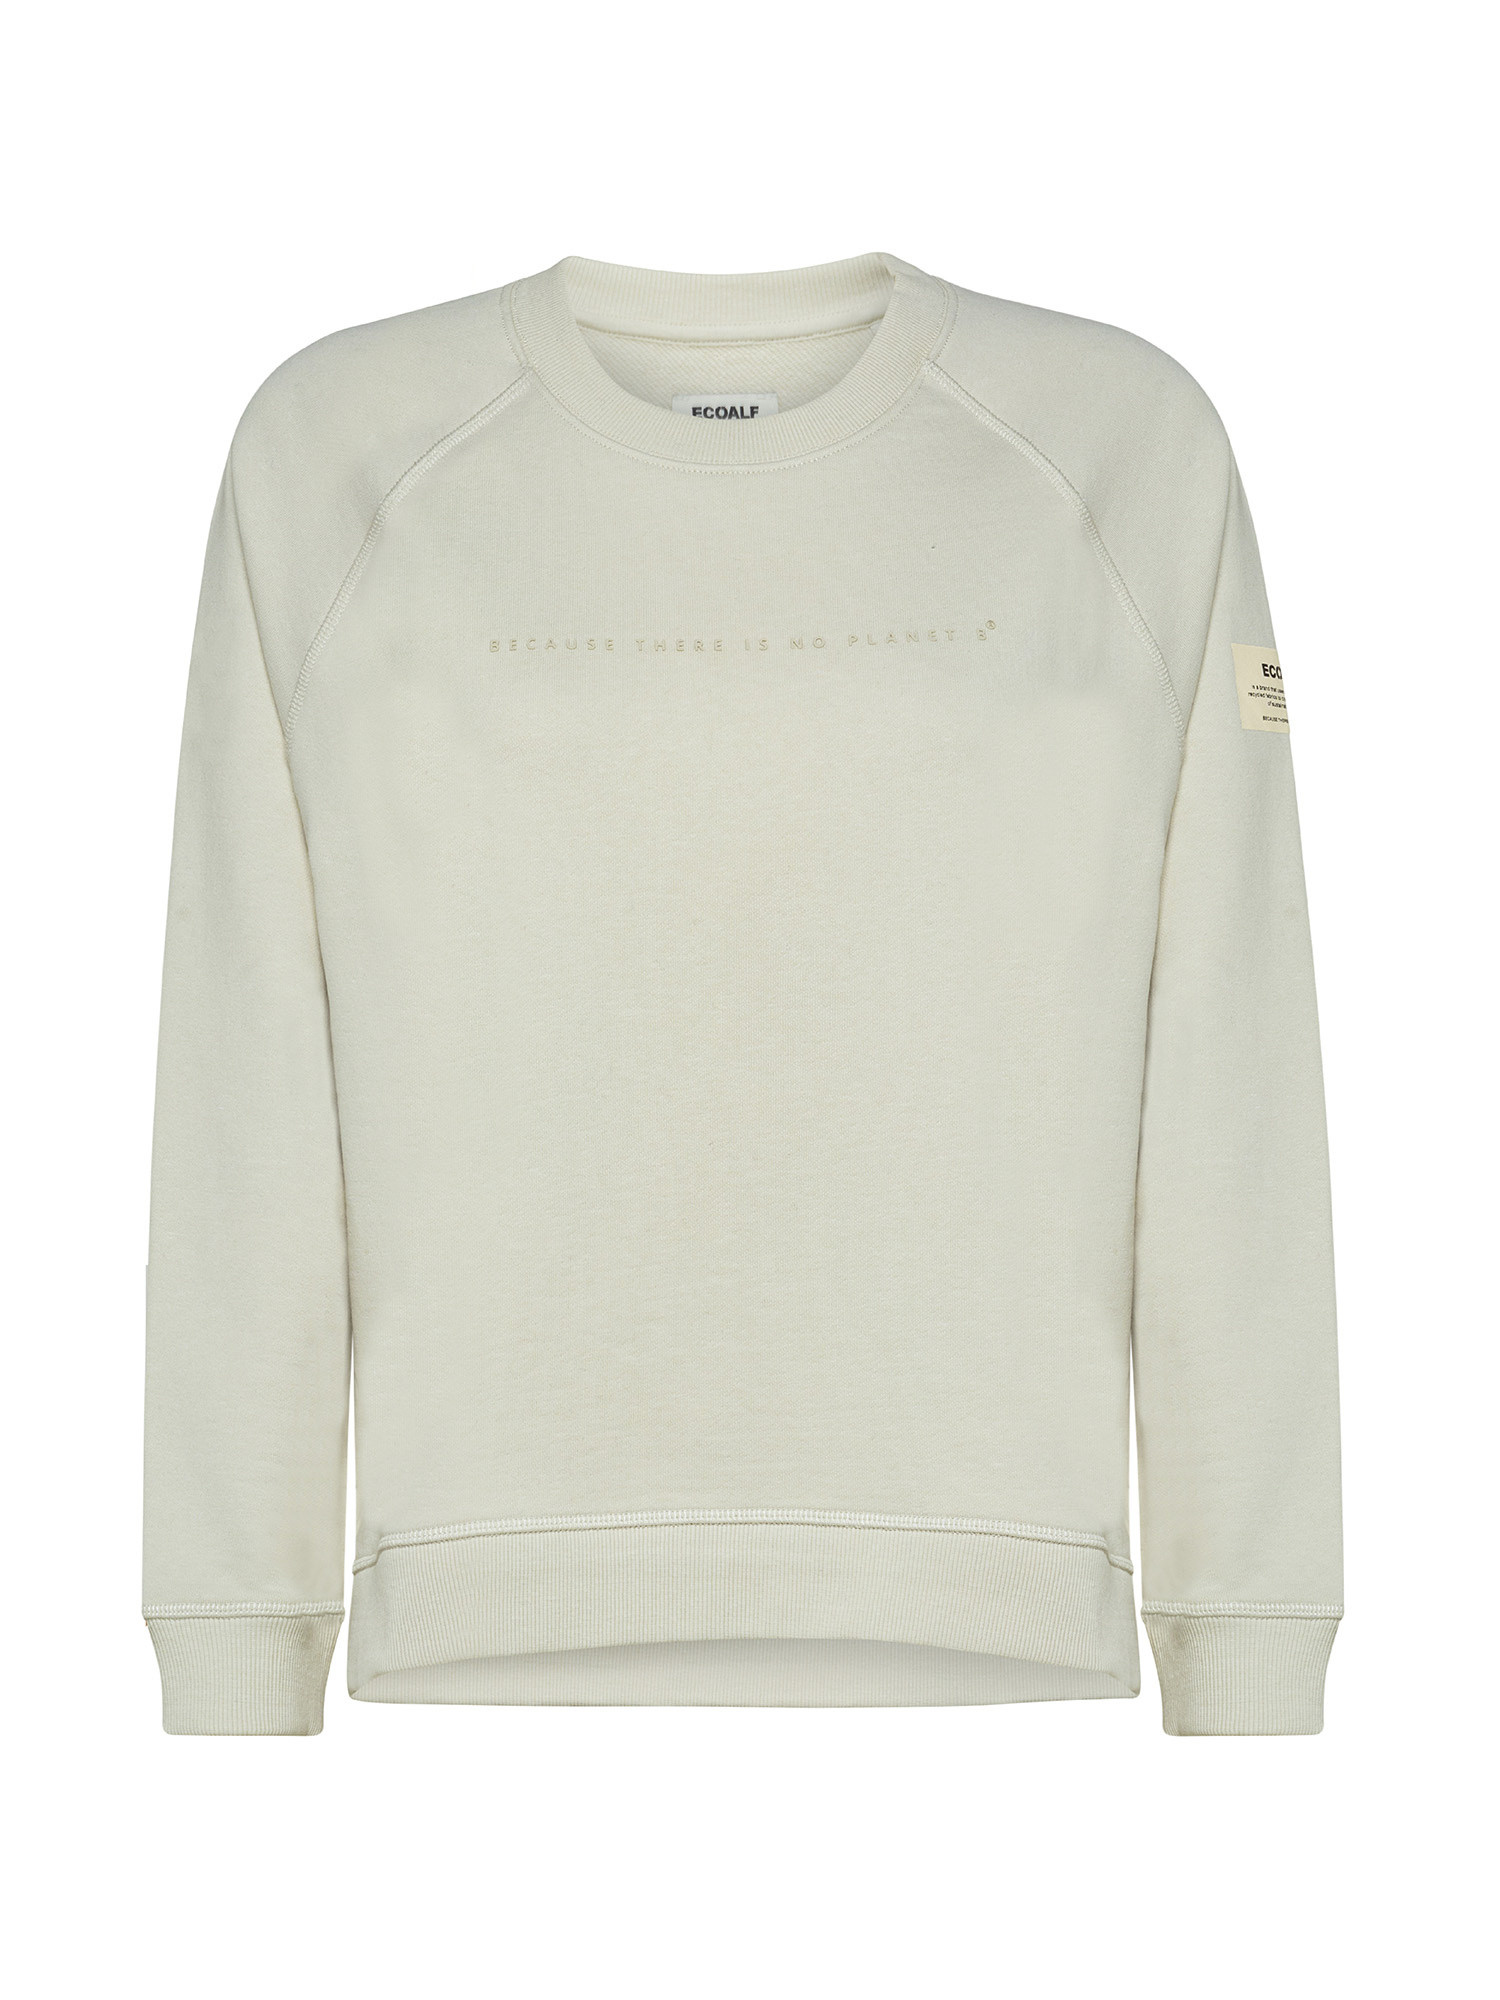 Ecoalf - Sirah sweatshirt with print, White, large image number 0